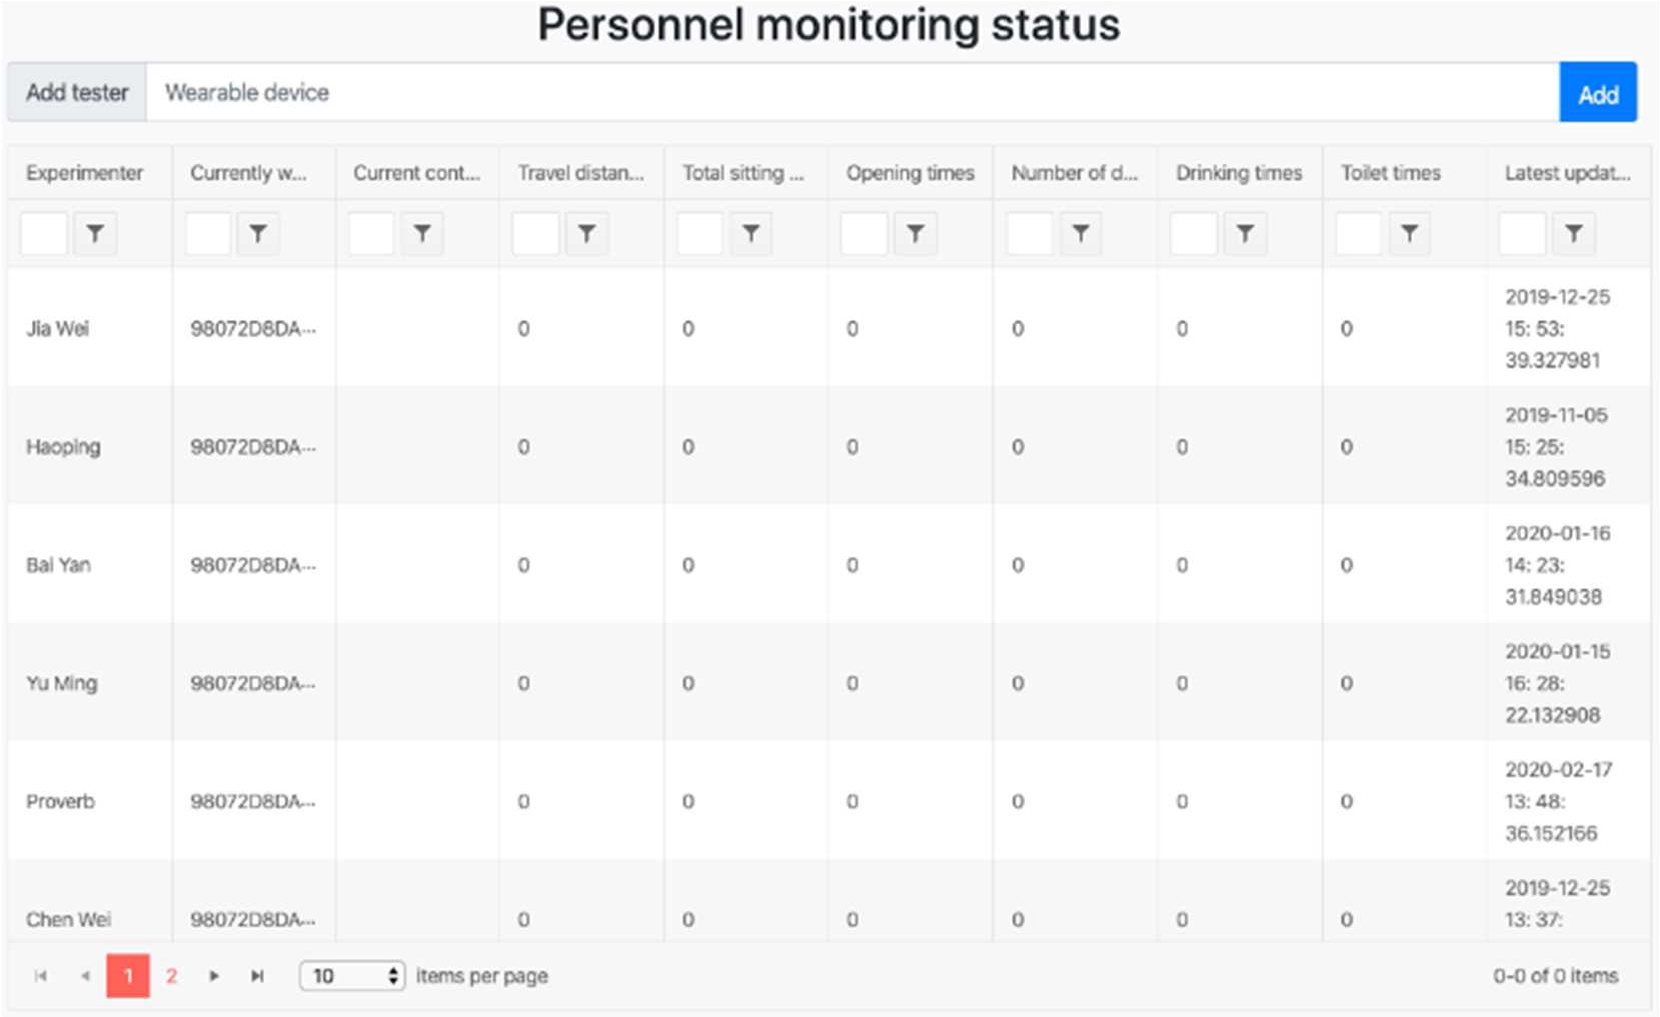 Personnel monitoring status.